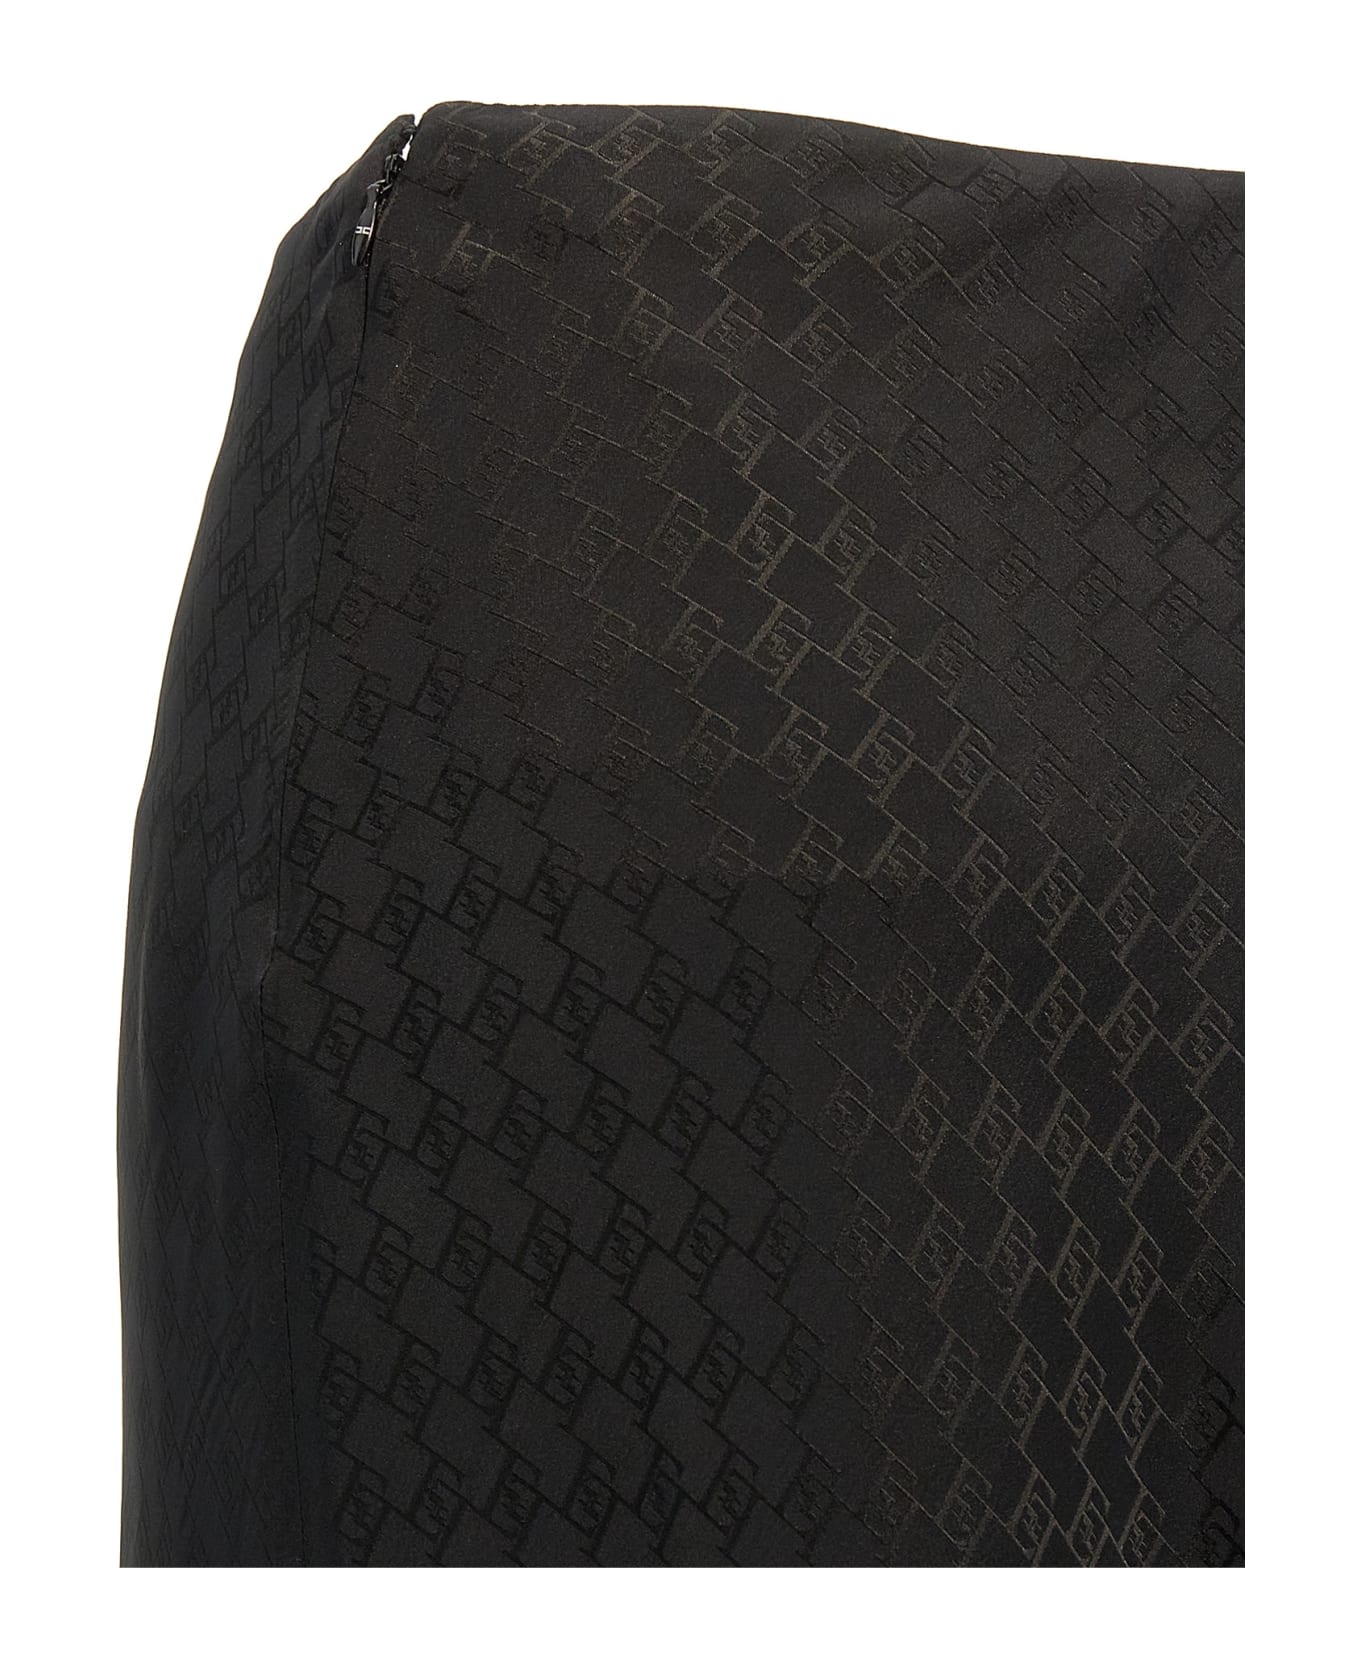 Elisabetta Franchi All Over Logo Skirt - Black スカート